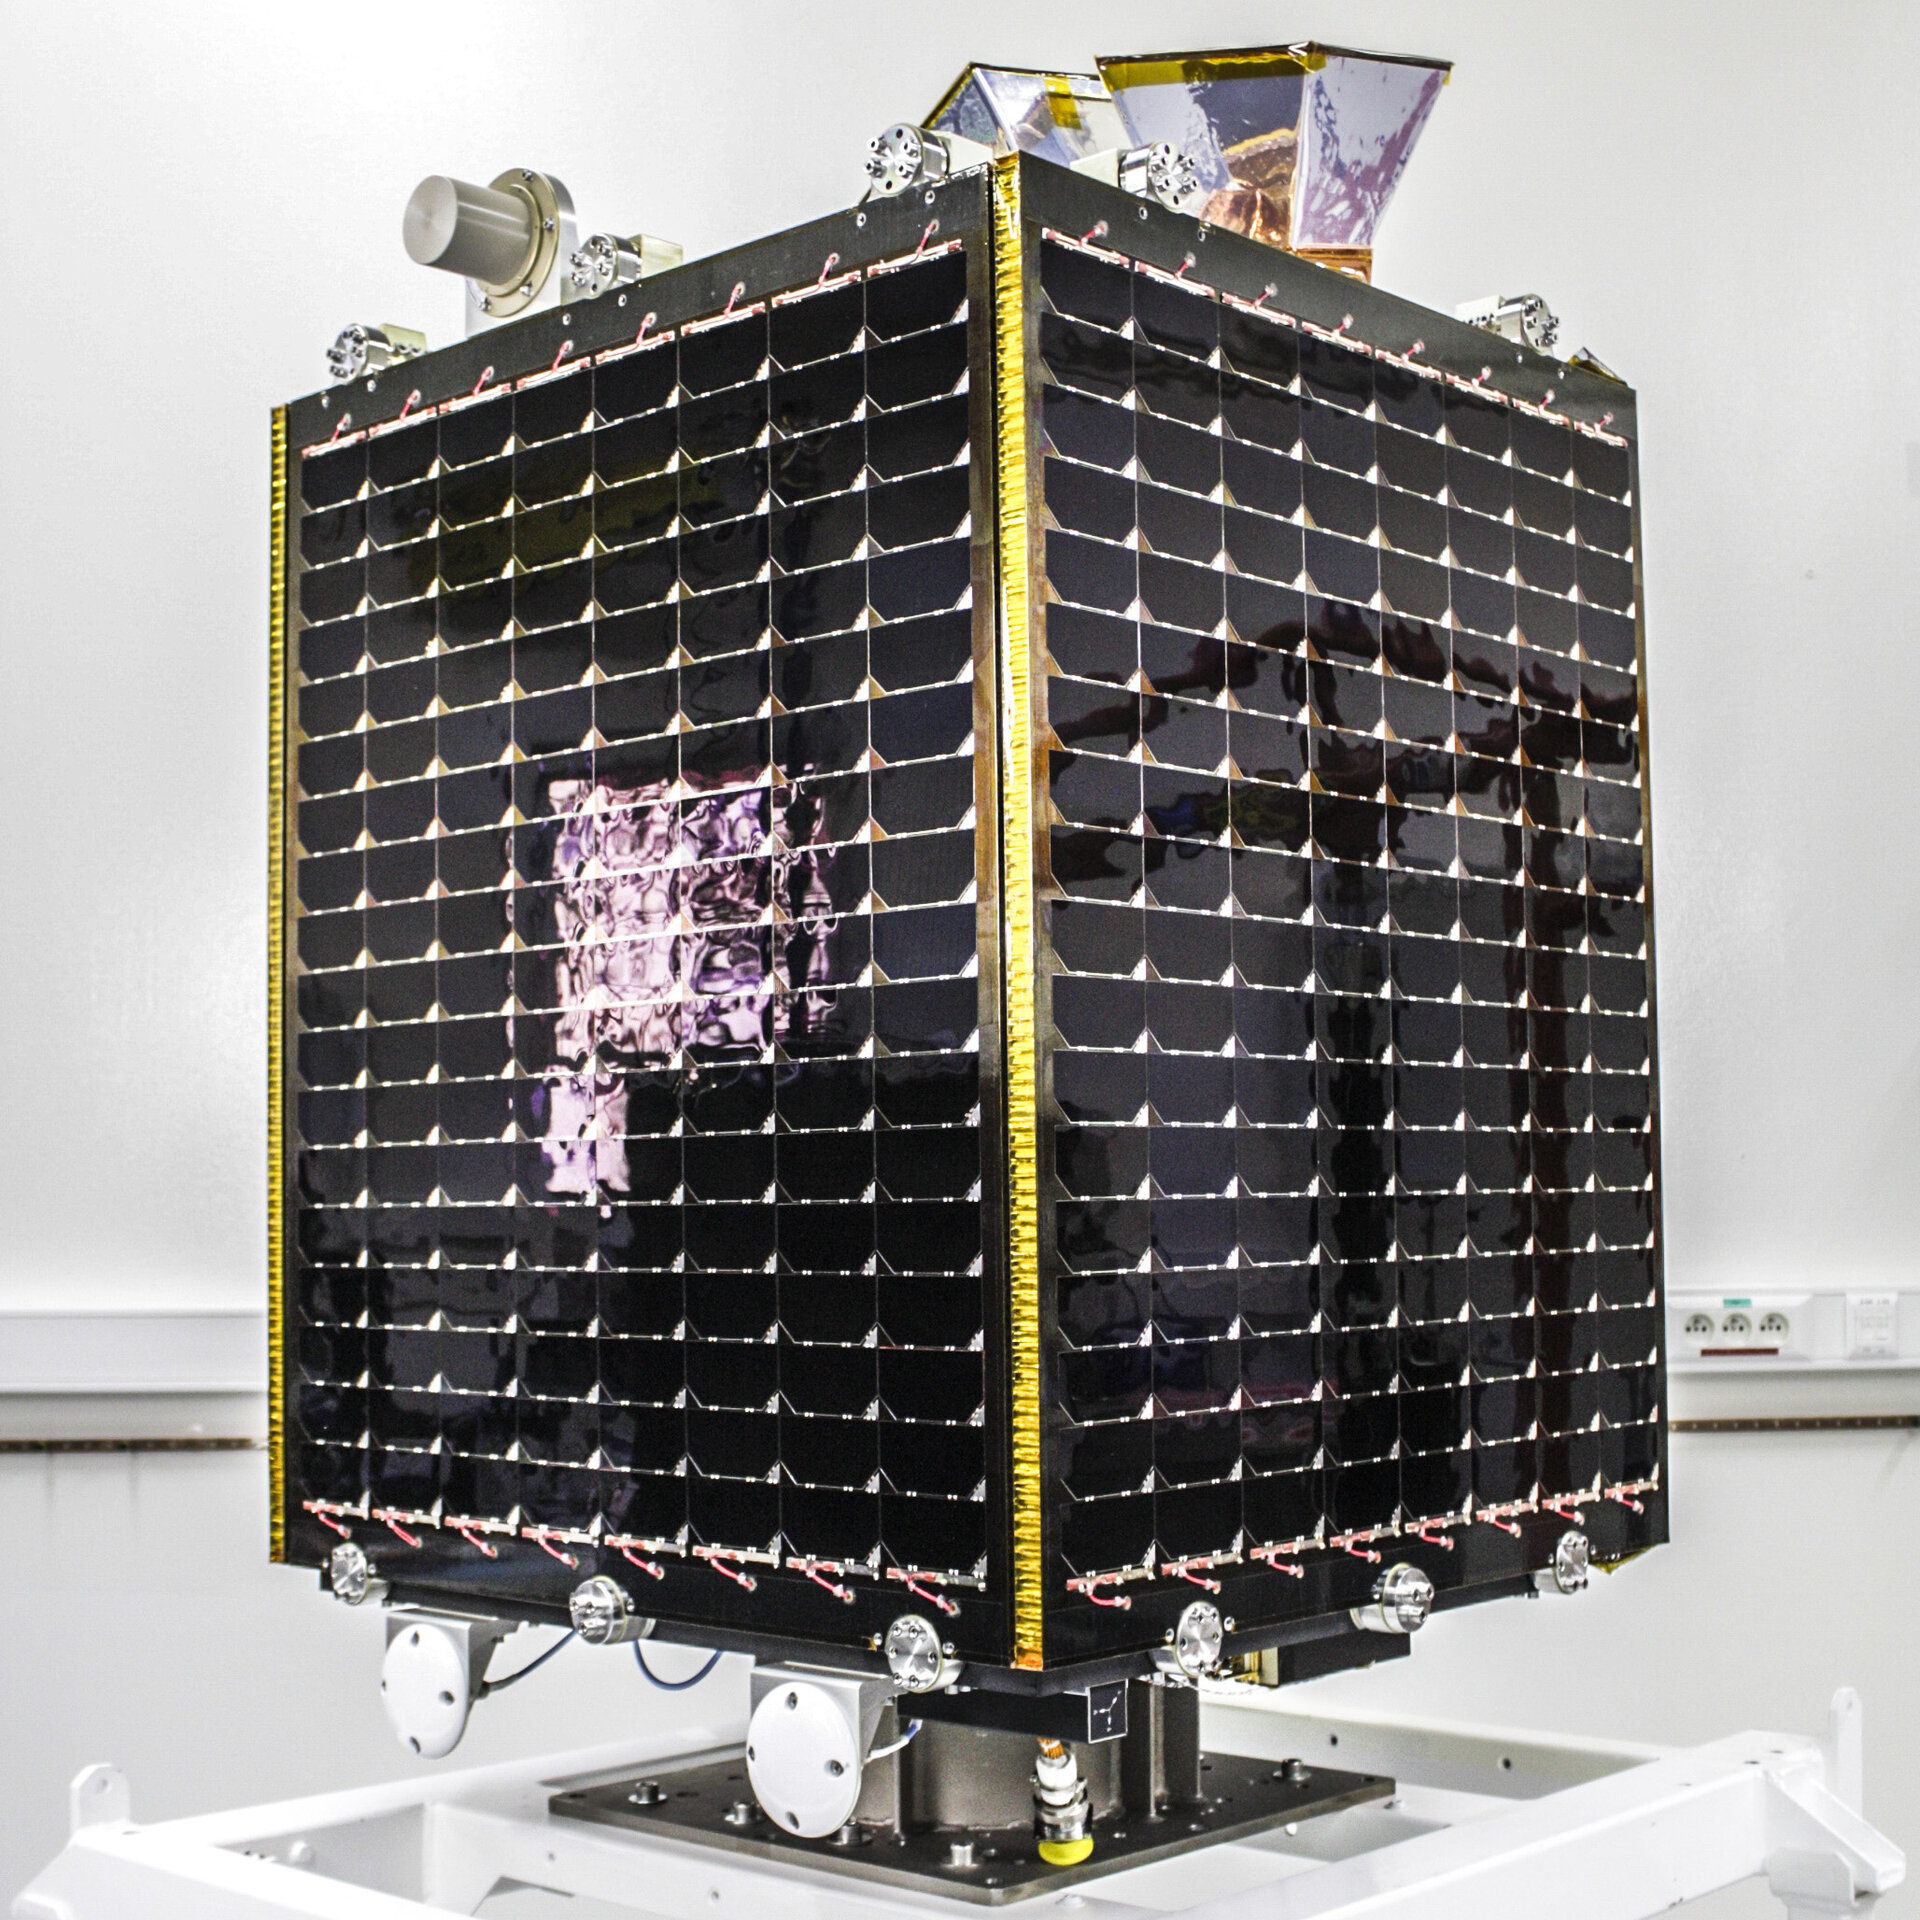 Completed Proba-V satellite